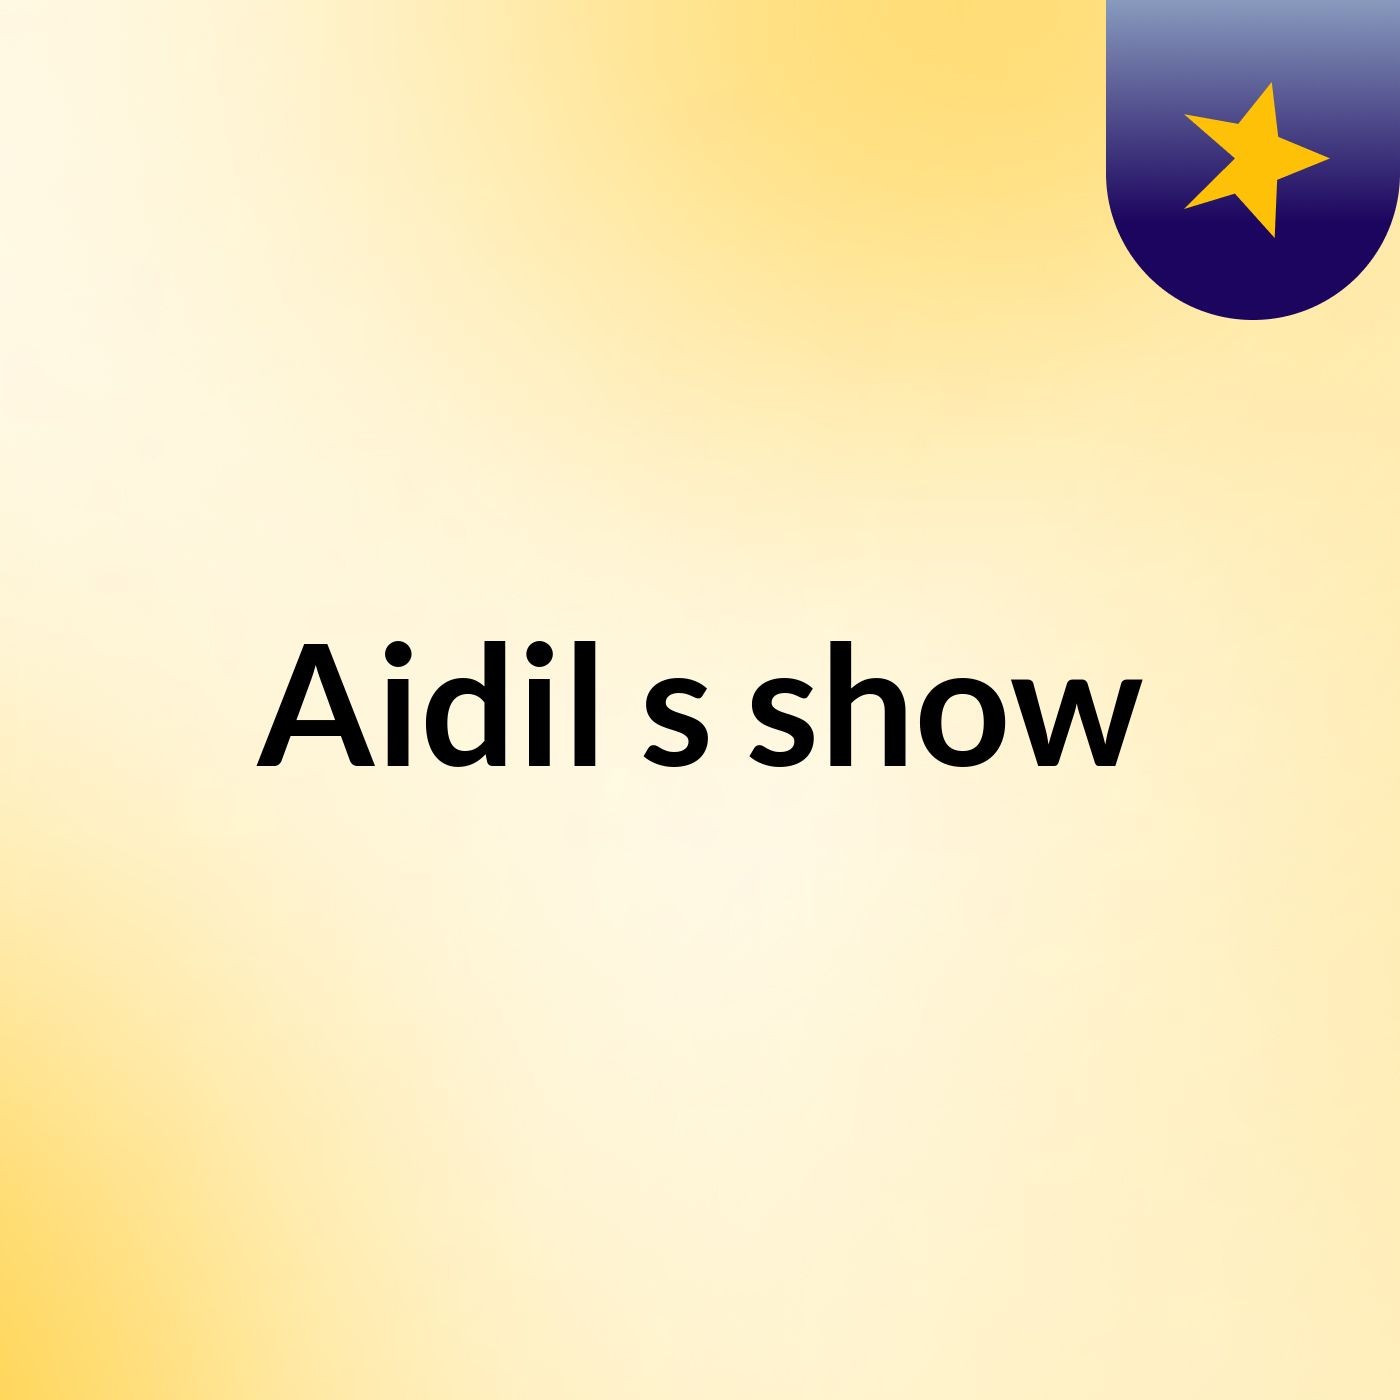 Aidil's show